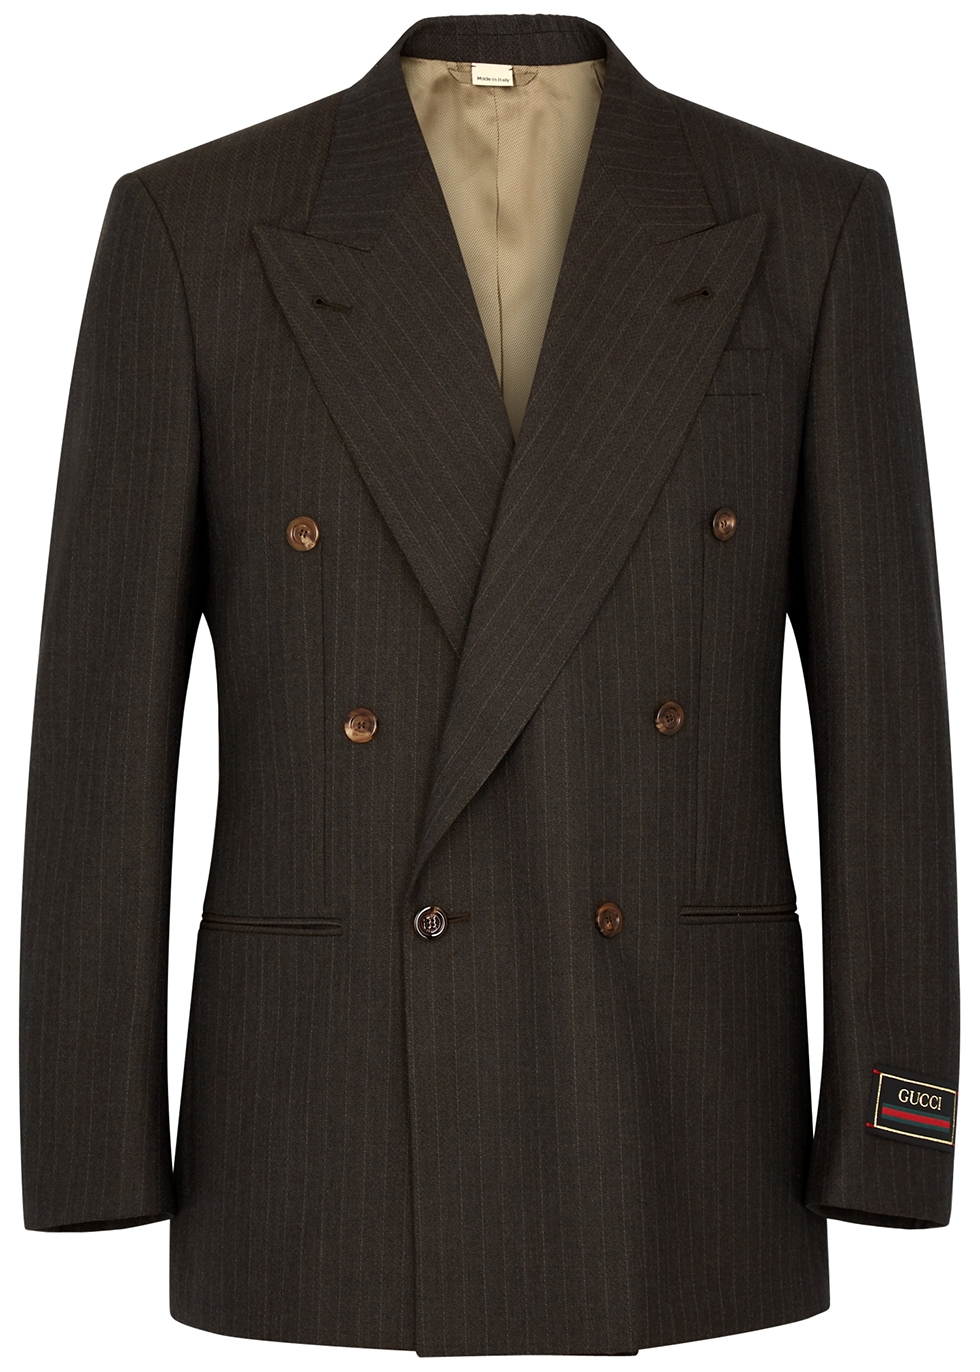 Gucci Charcoal double-breasted wool blazer - Harvey Nichols